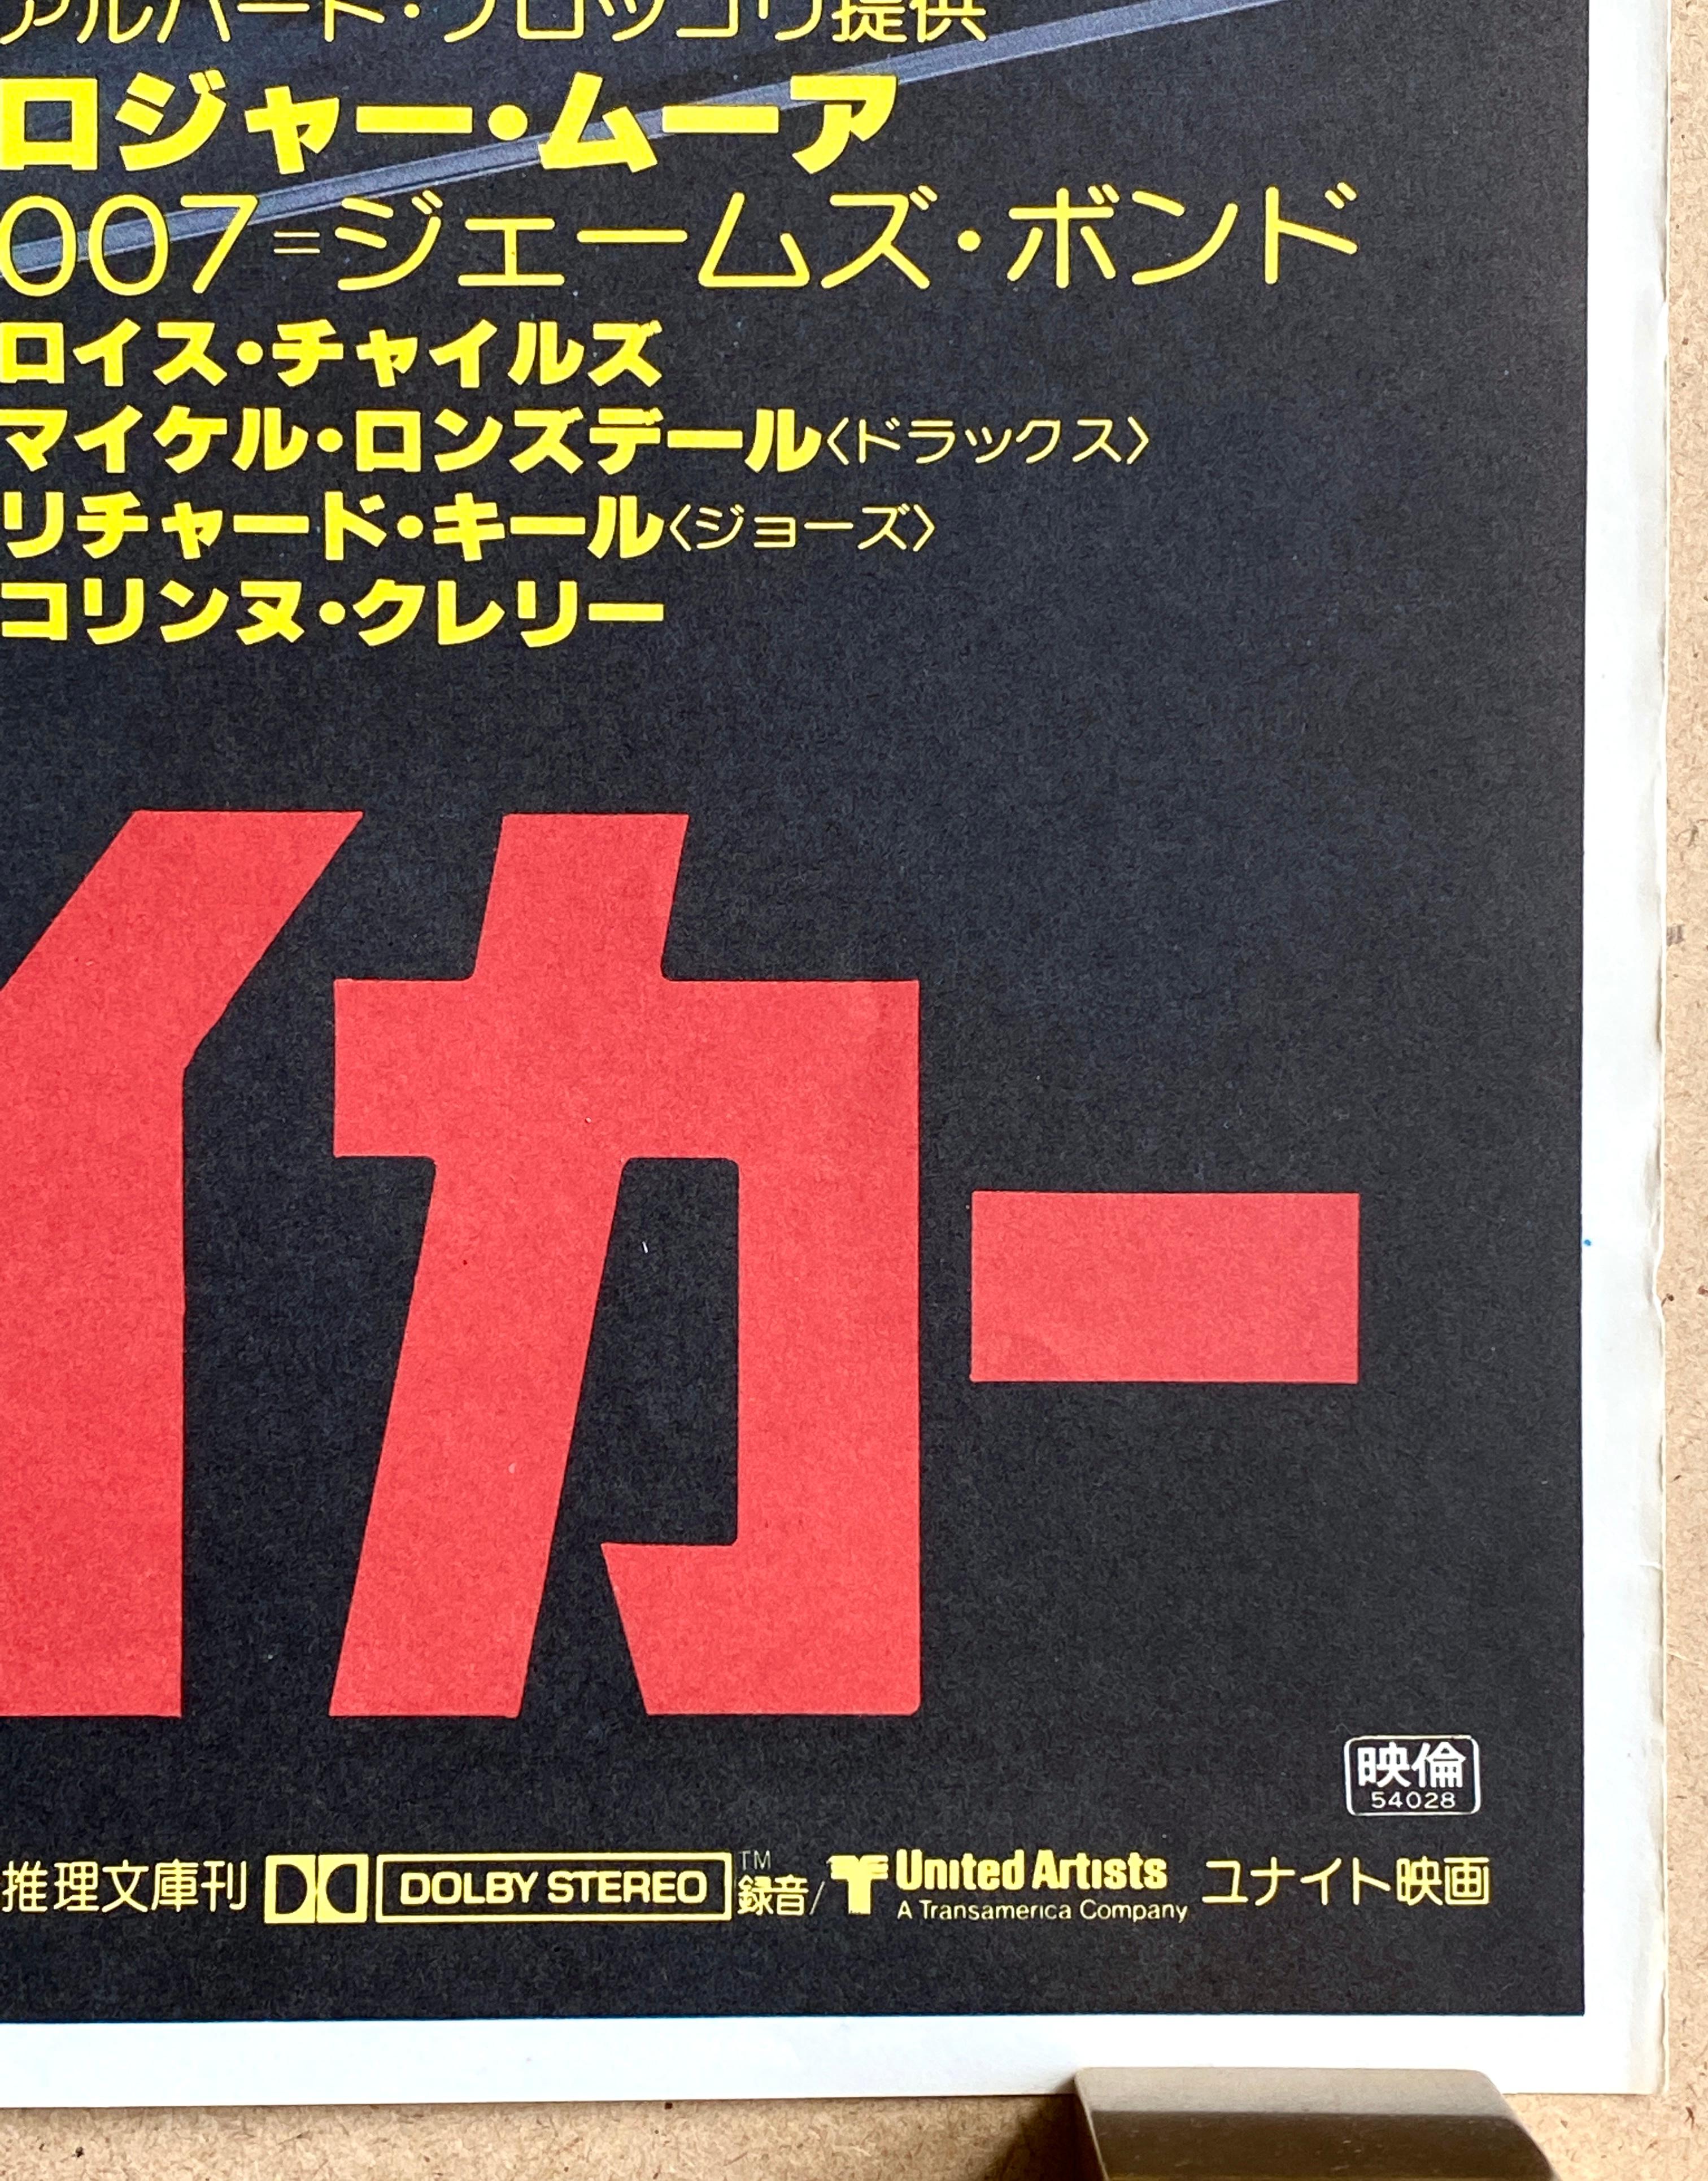 James Bond 'Moonraker' Original Vintage Movie Poster, Japanese, 1979 2